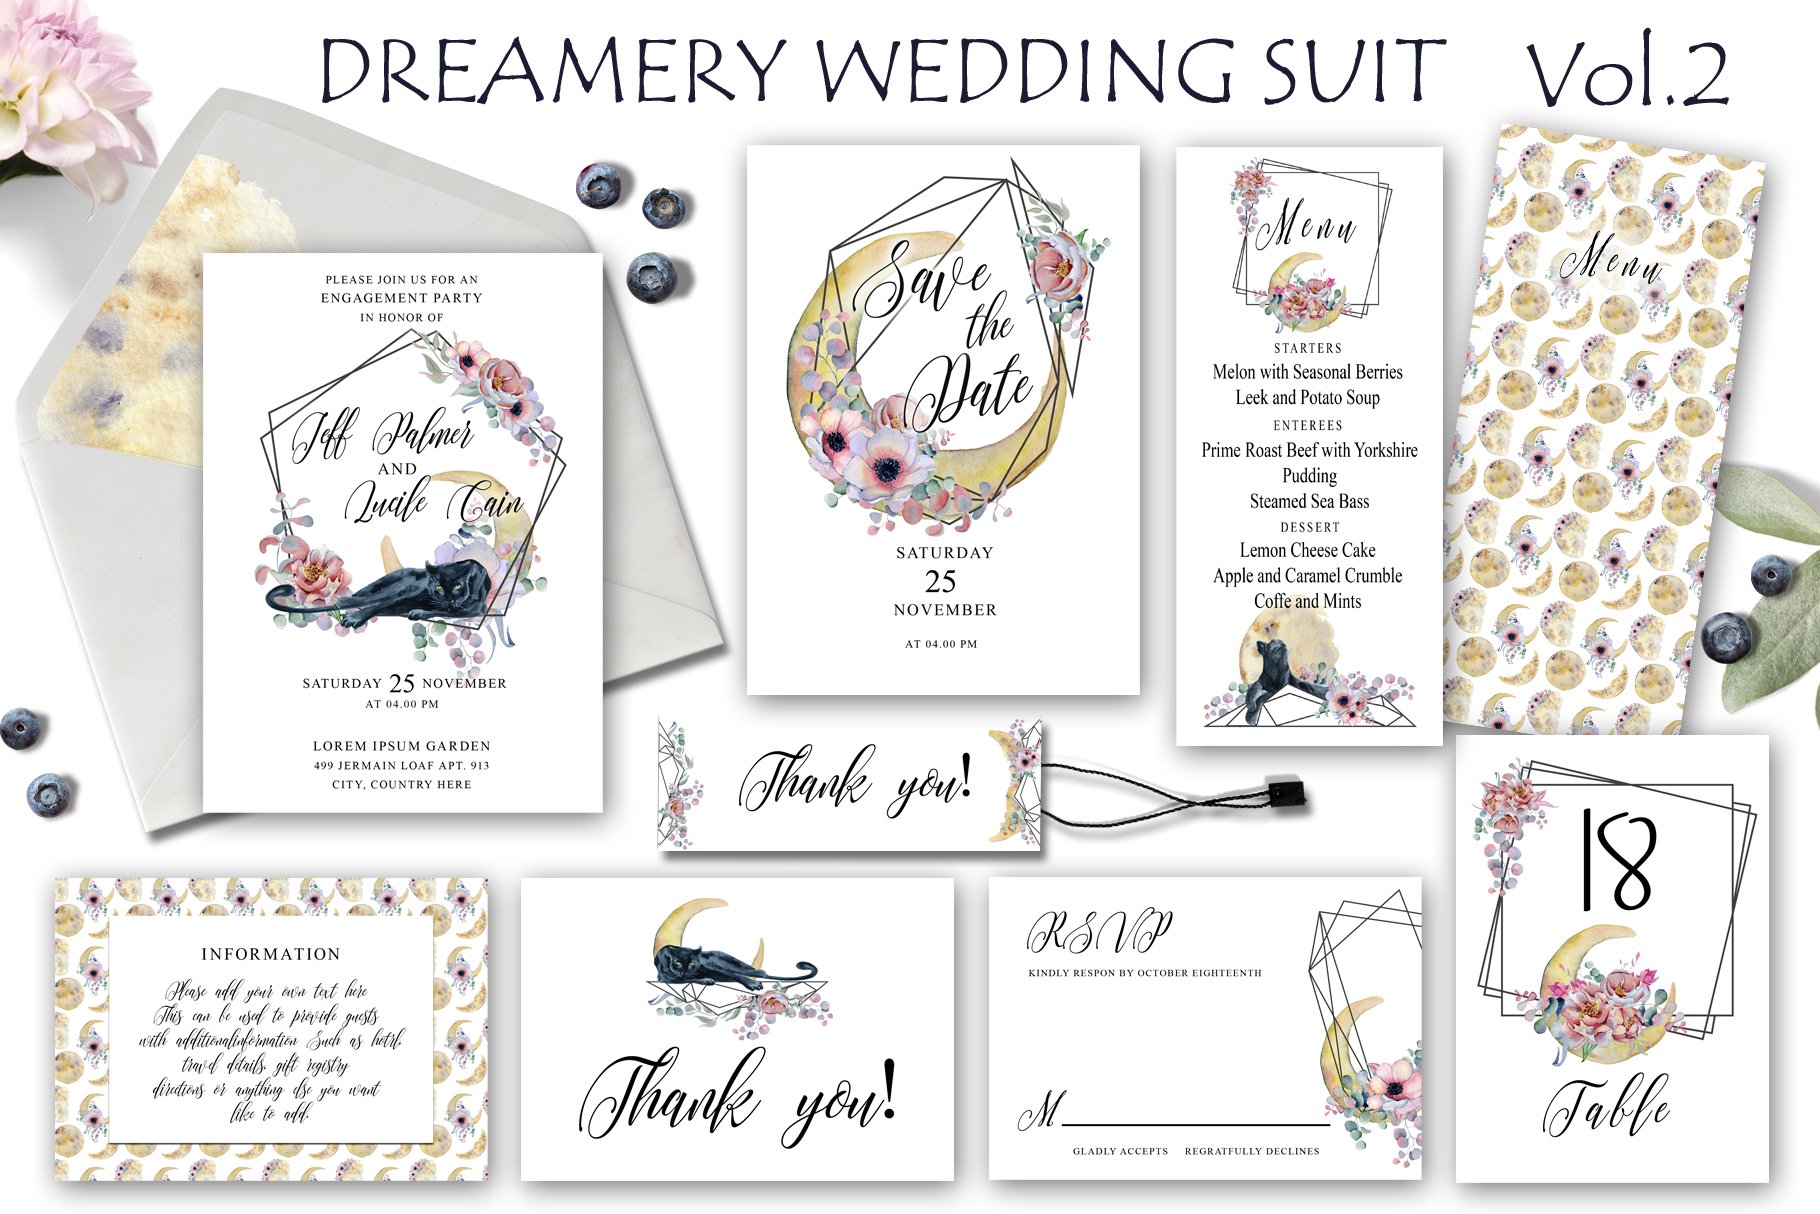 dreamery wedding suit14